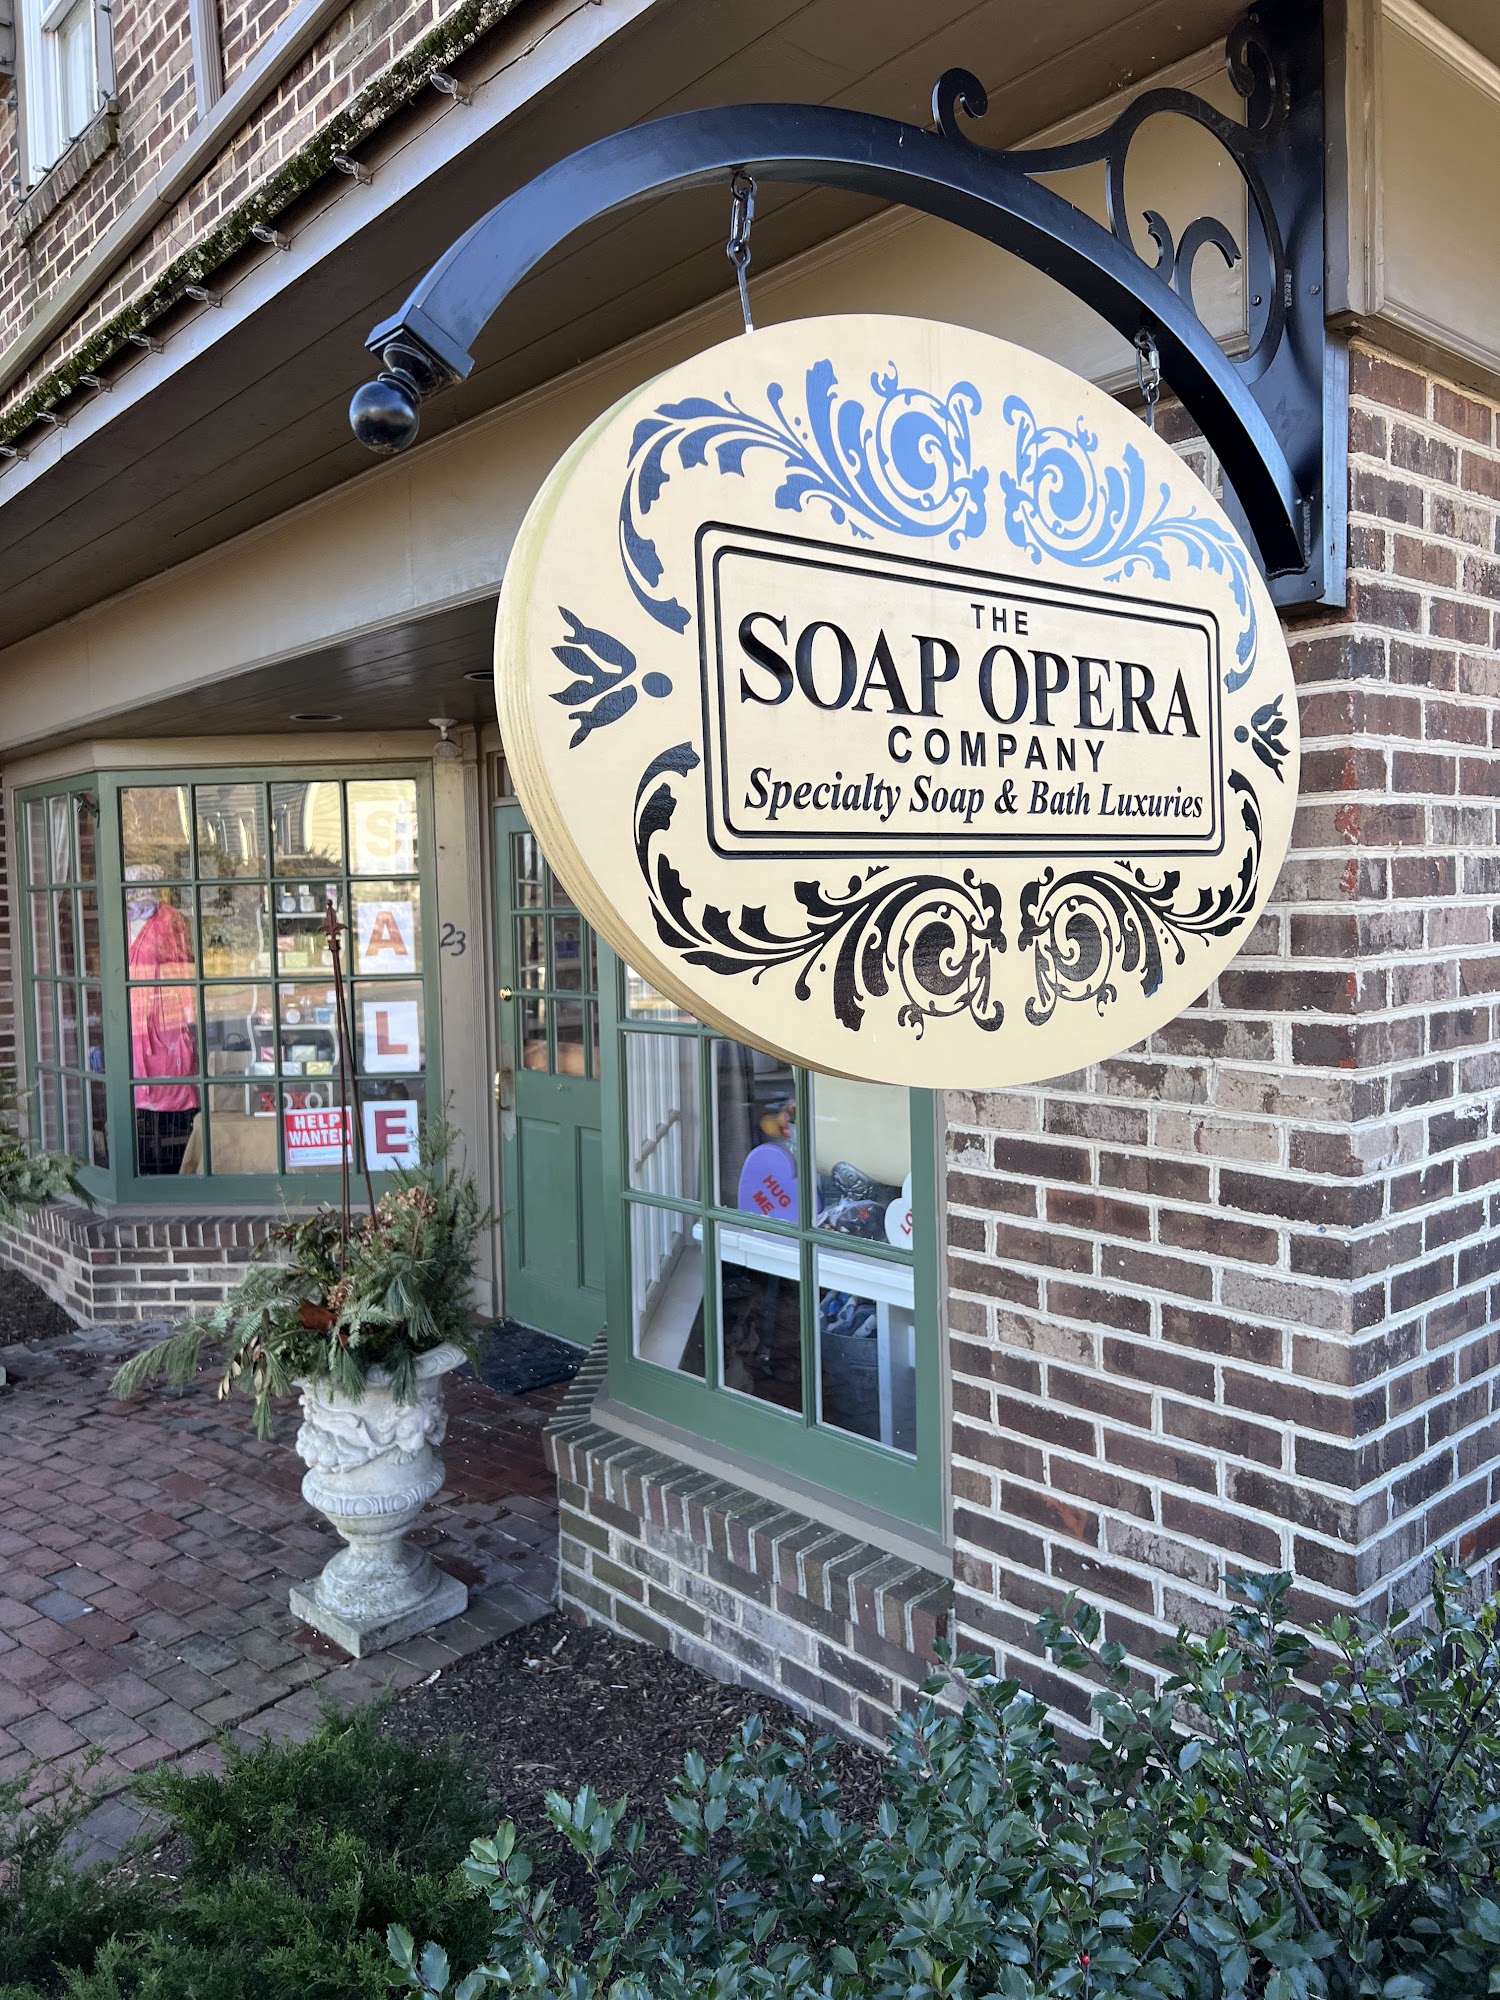 The Soap Opera Company